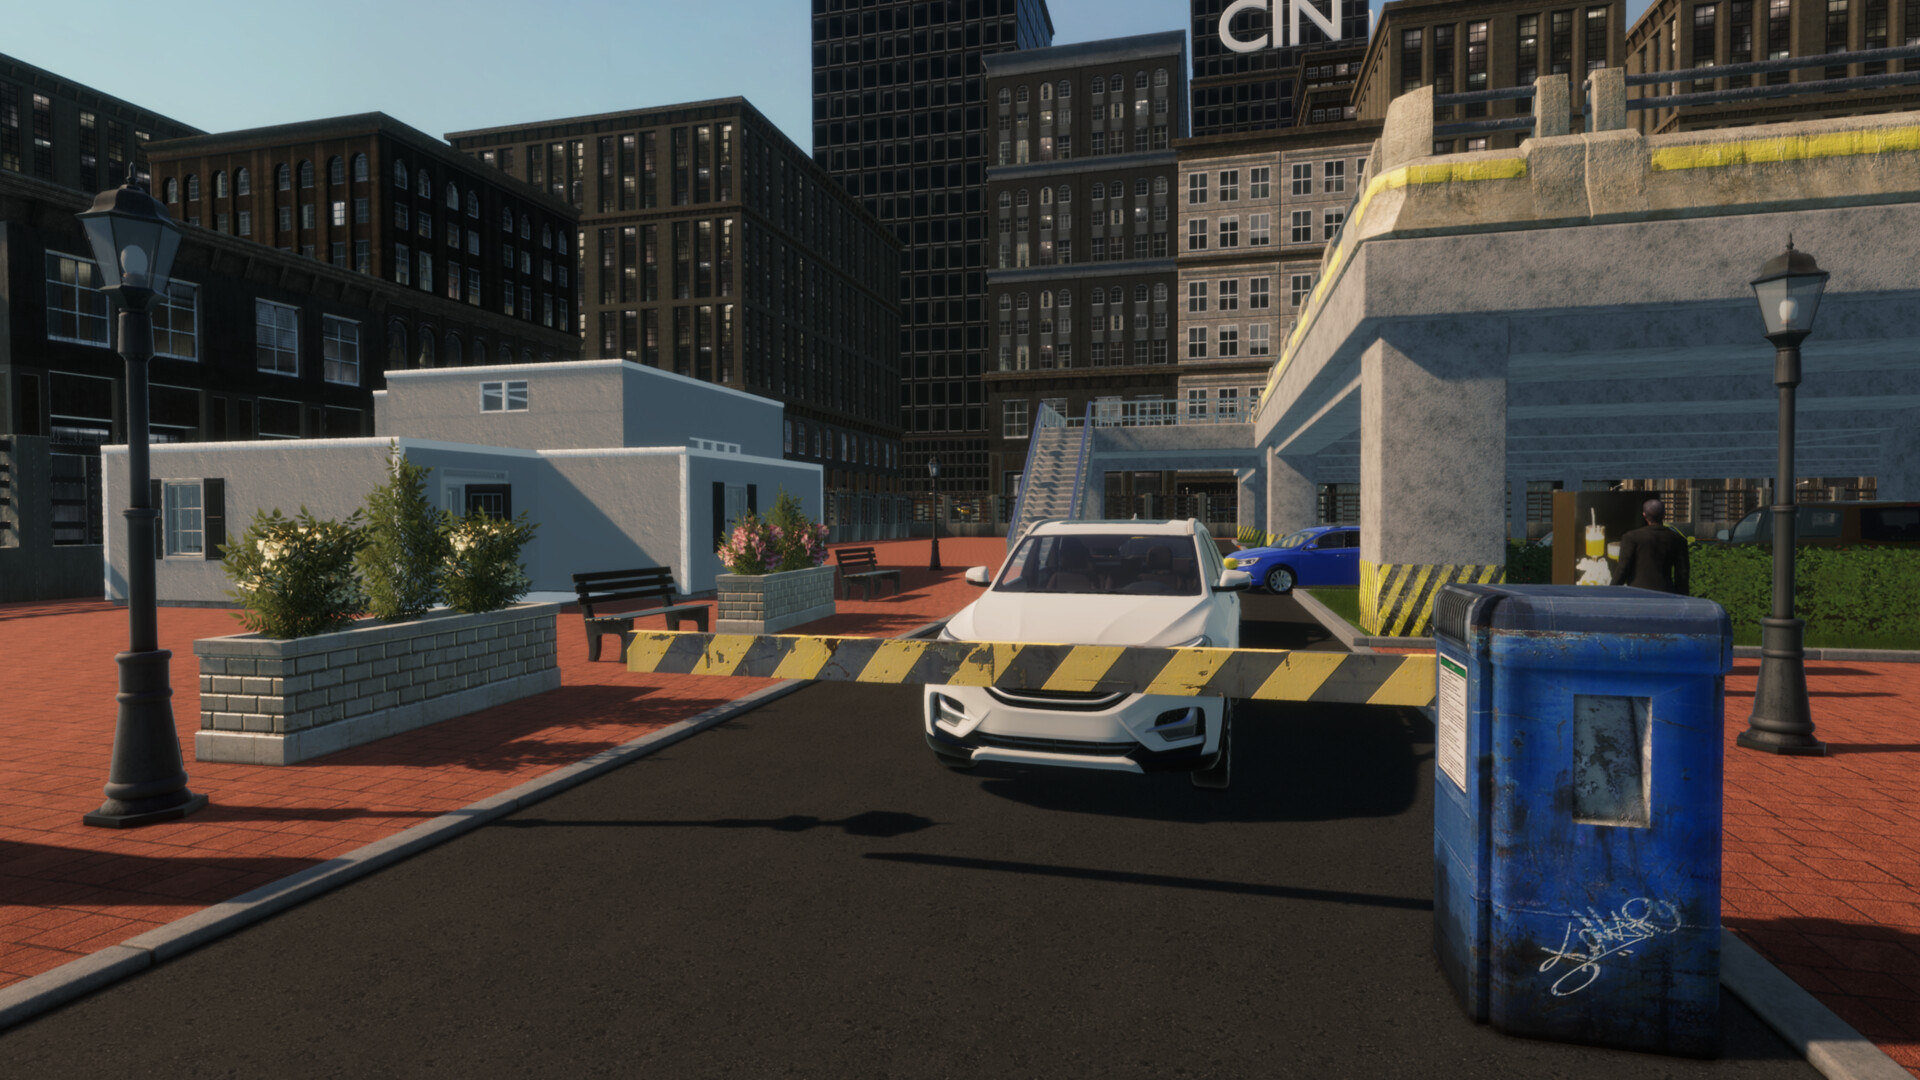 Parking Tycoon: Business Simulator Steam CD Key 8.58 $